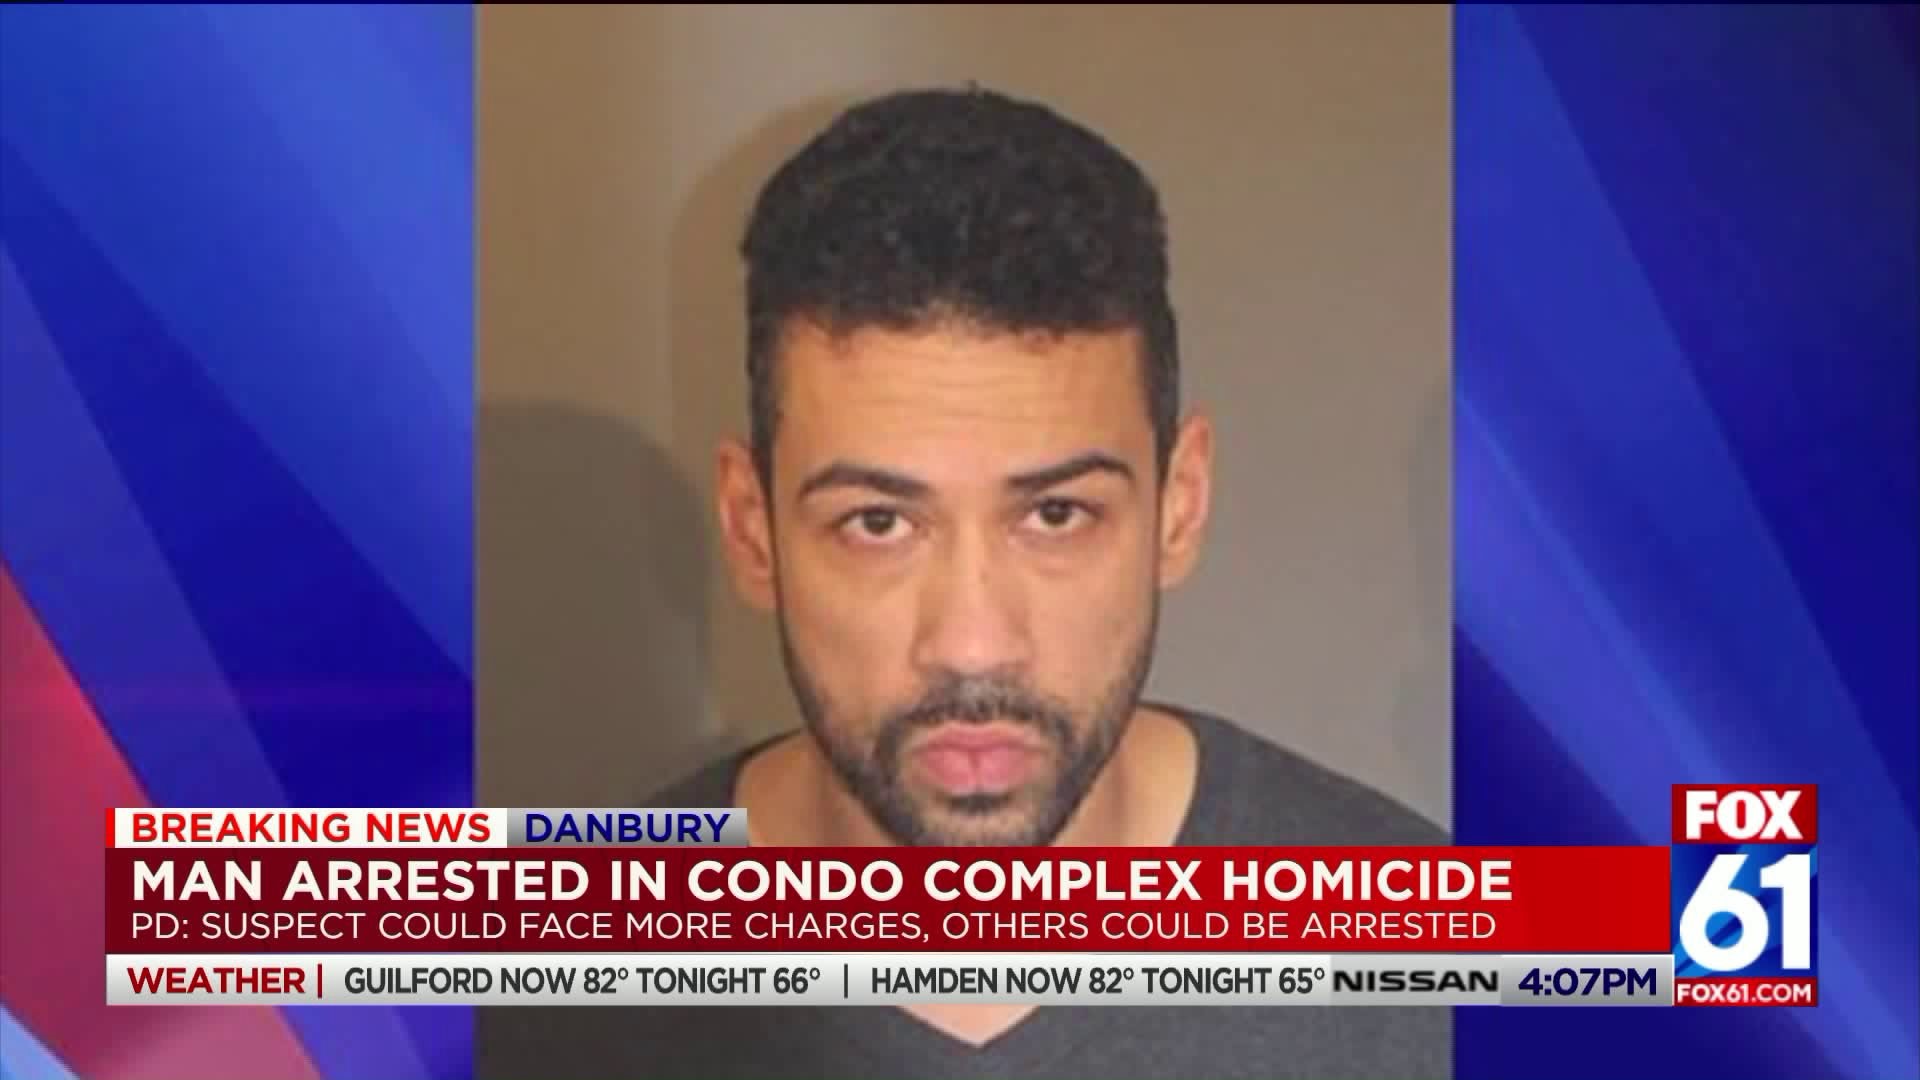 Man arrested in condo complex homicide